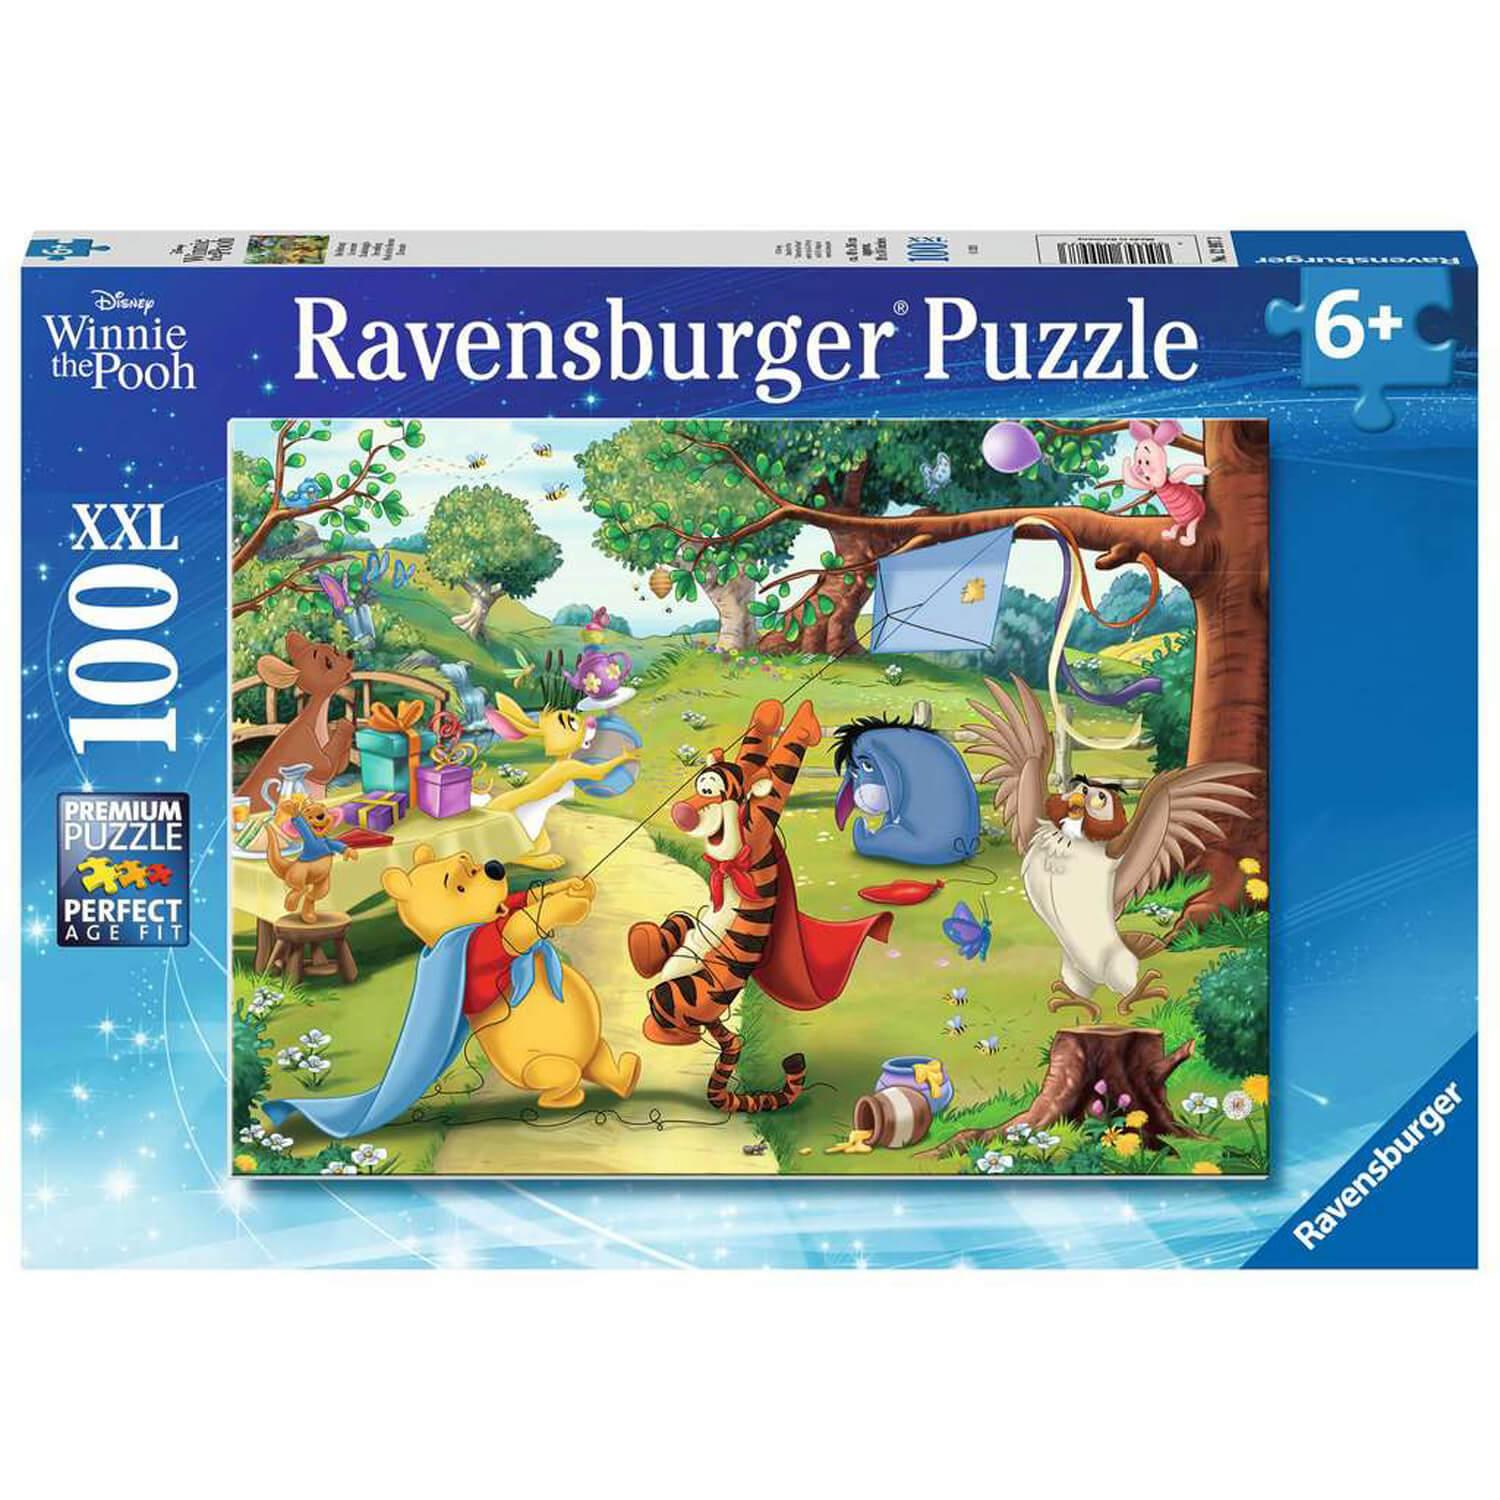 Winnie The Pooh Puzzle 100 Teile für Kinder 41 x 28 cm Kinderpuzzle Winnie Puuh 